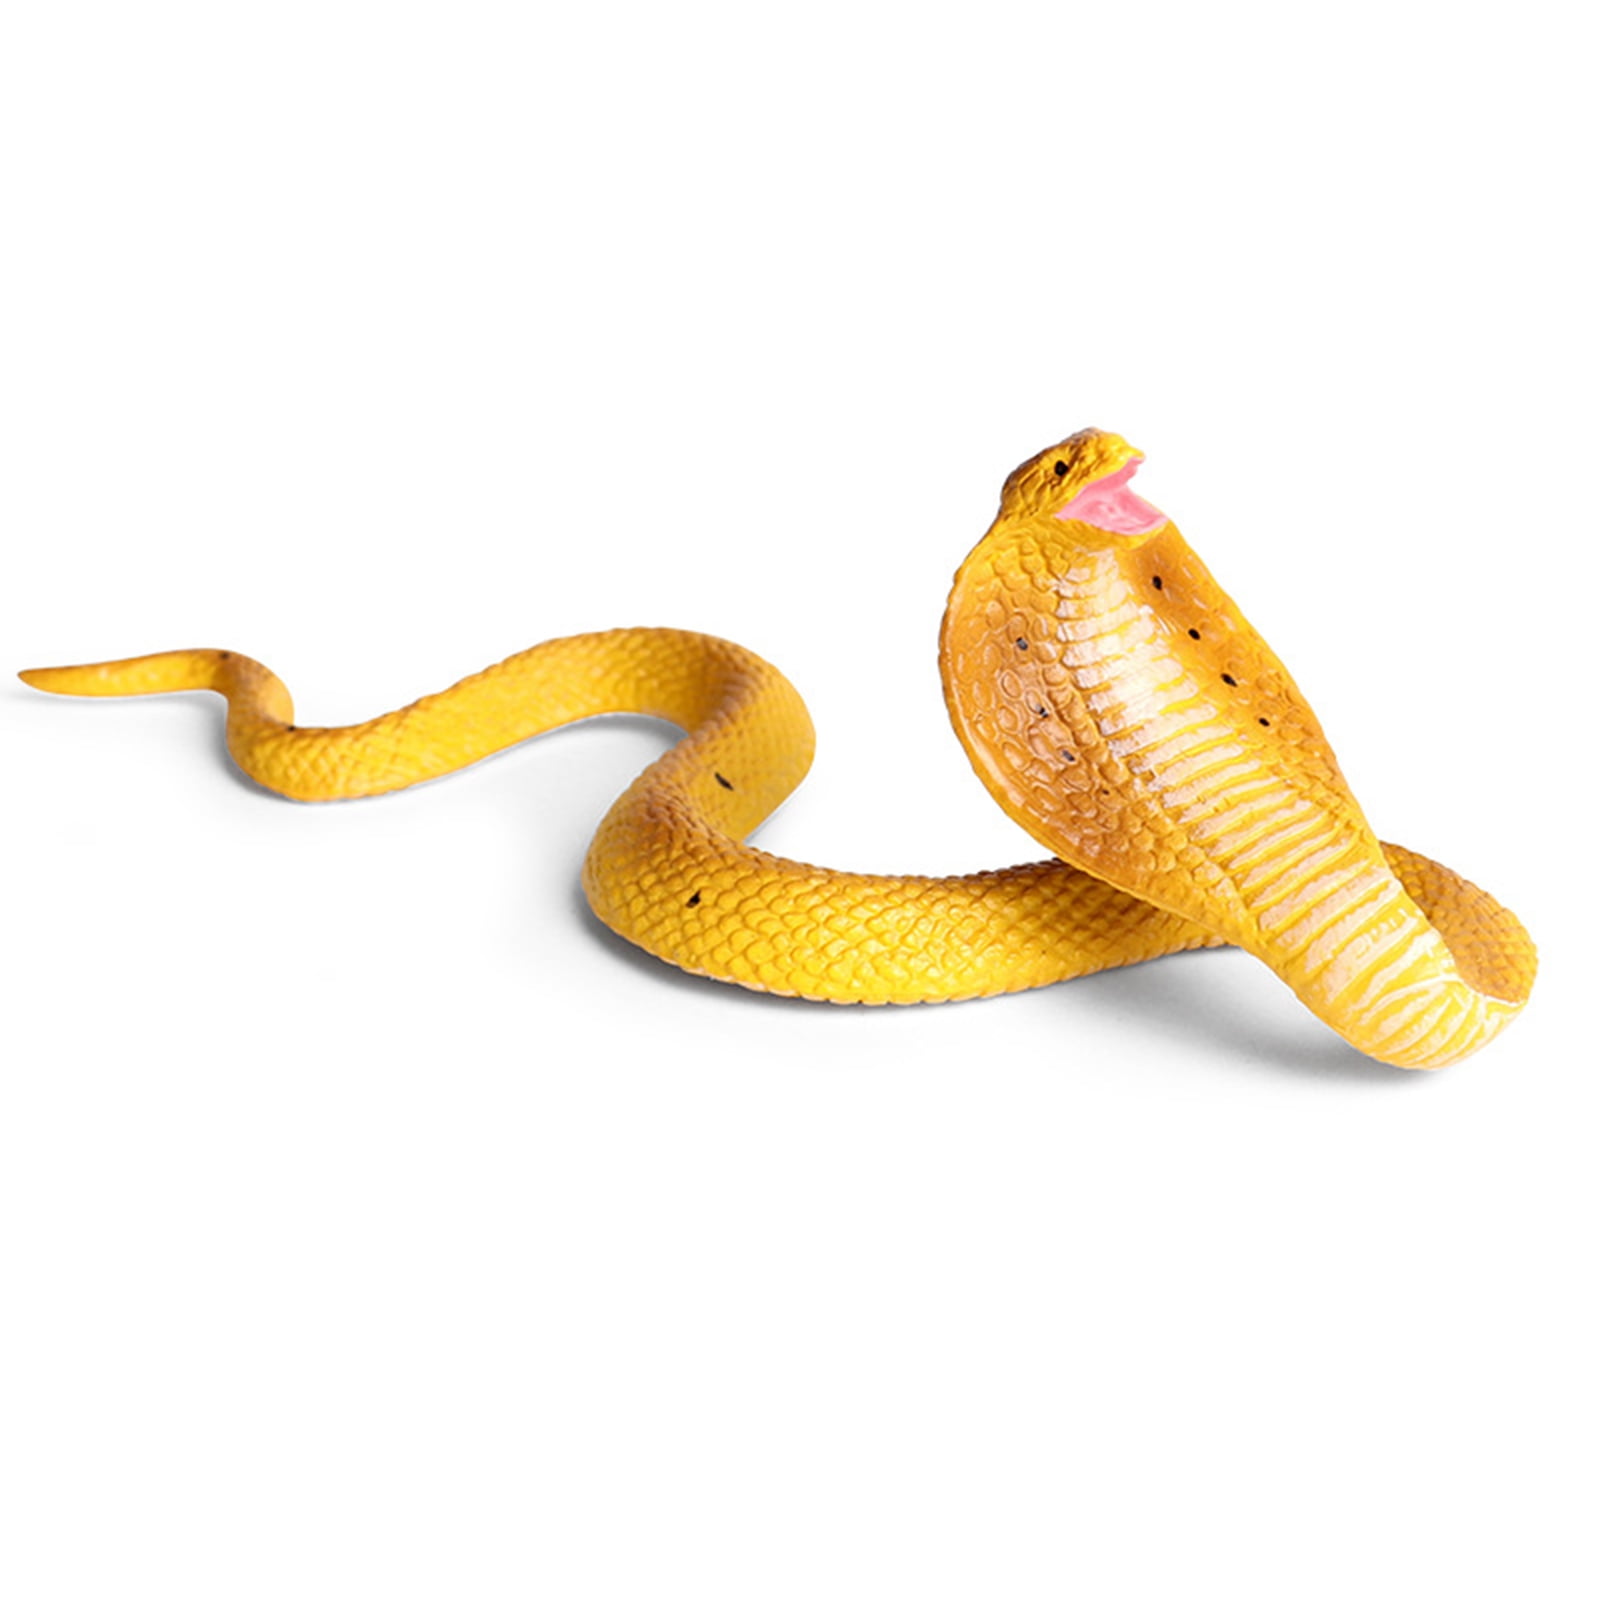 Toys Model Cobra Snake Useful Realistic Replica Animal Figure Children 